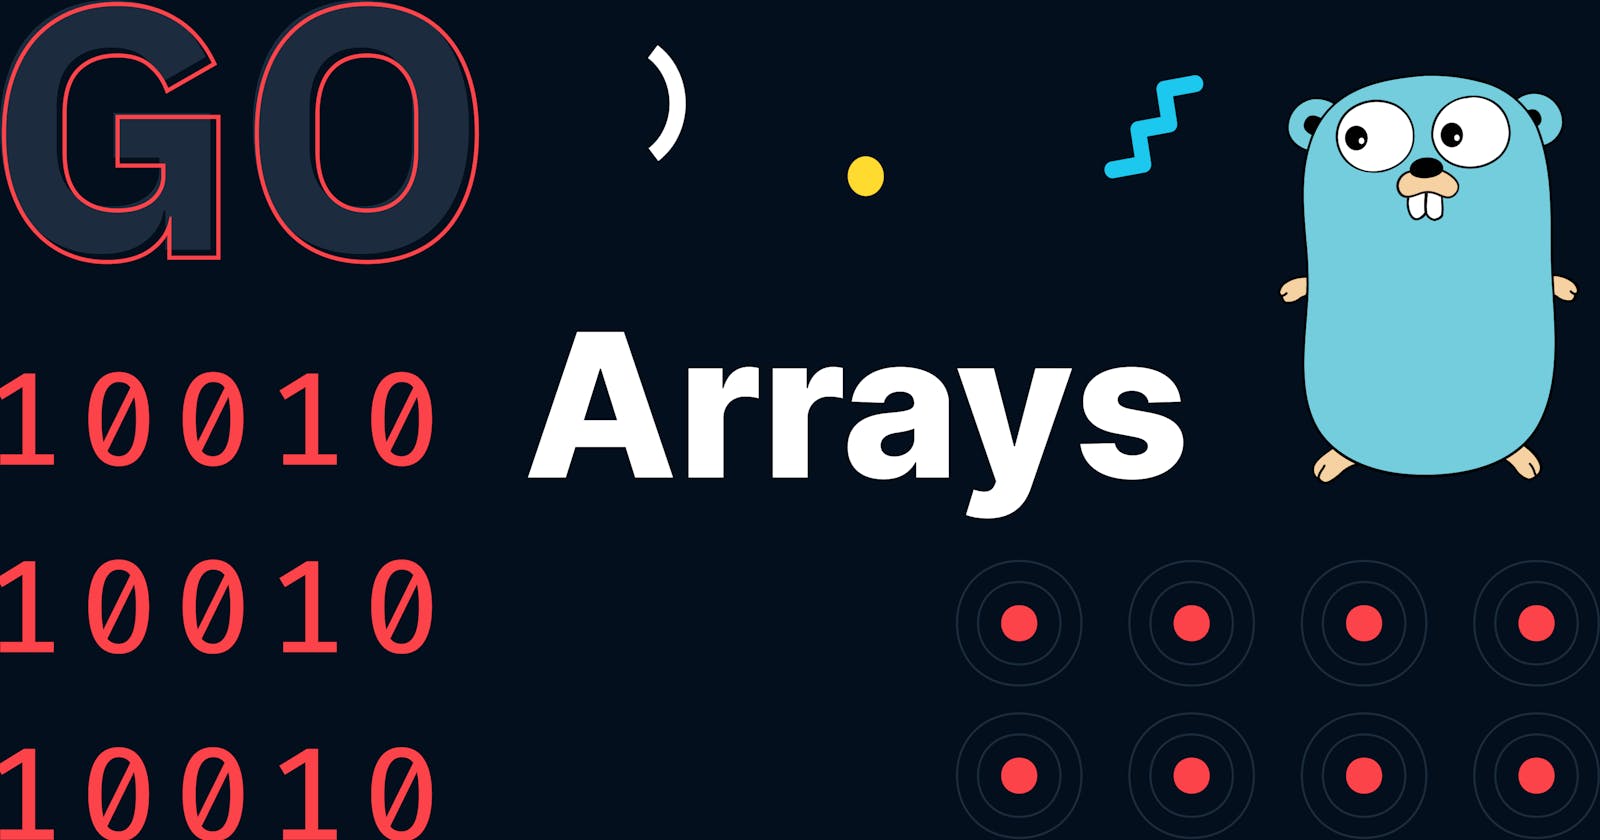 Arrays in Go Programming